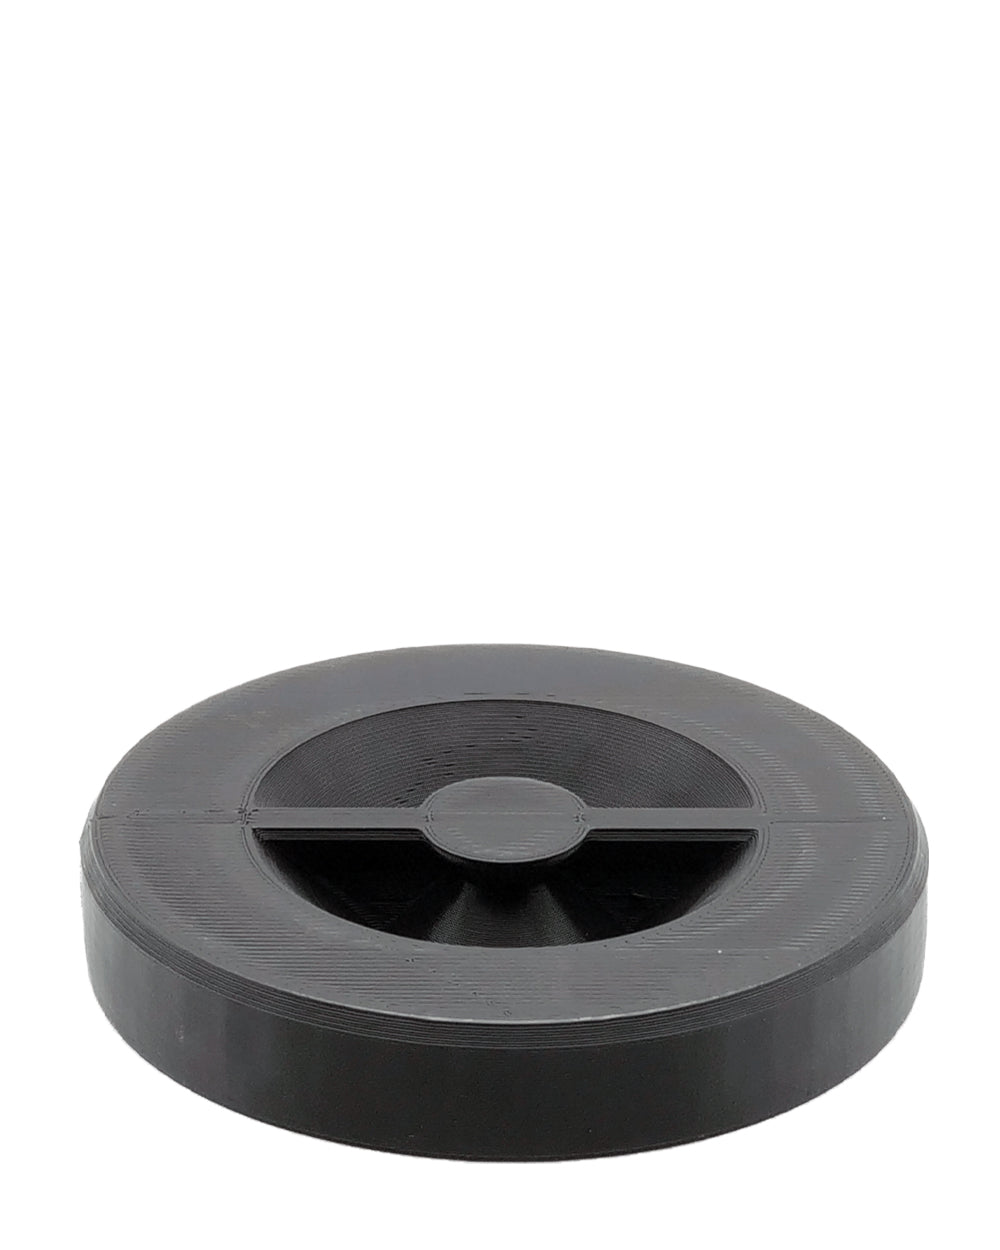 HUMBOLDT | Black Pre-Rolled Cones Filling Machine Cartridge 84mm | Fill 55 Cones Per Run - 3